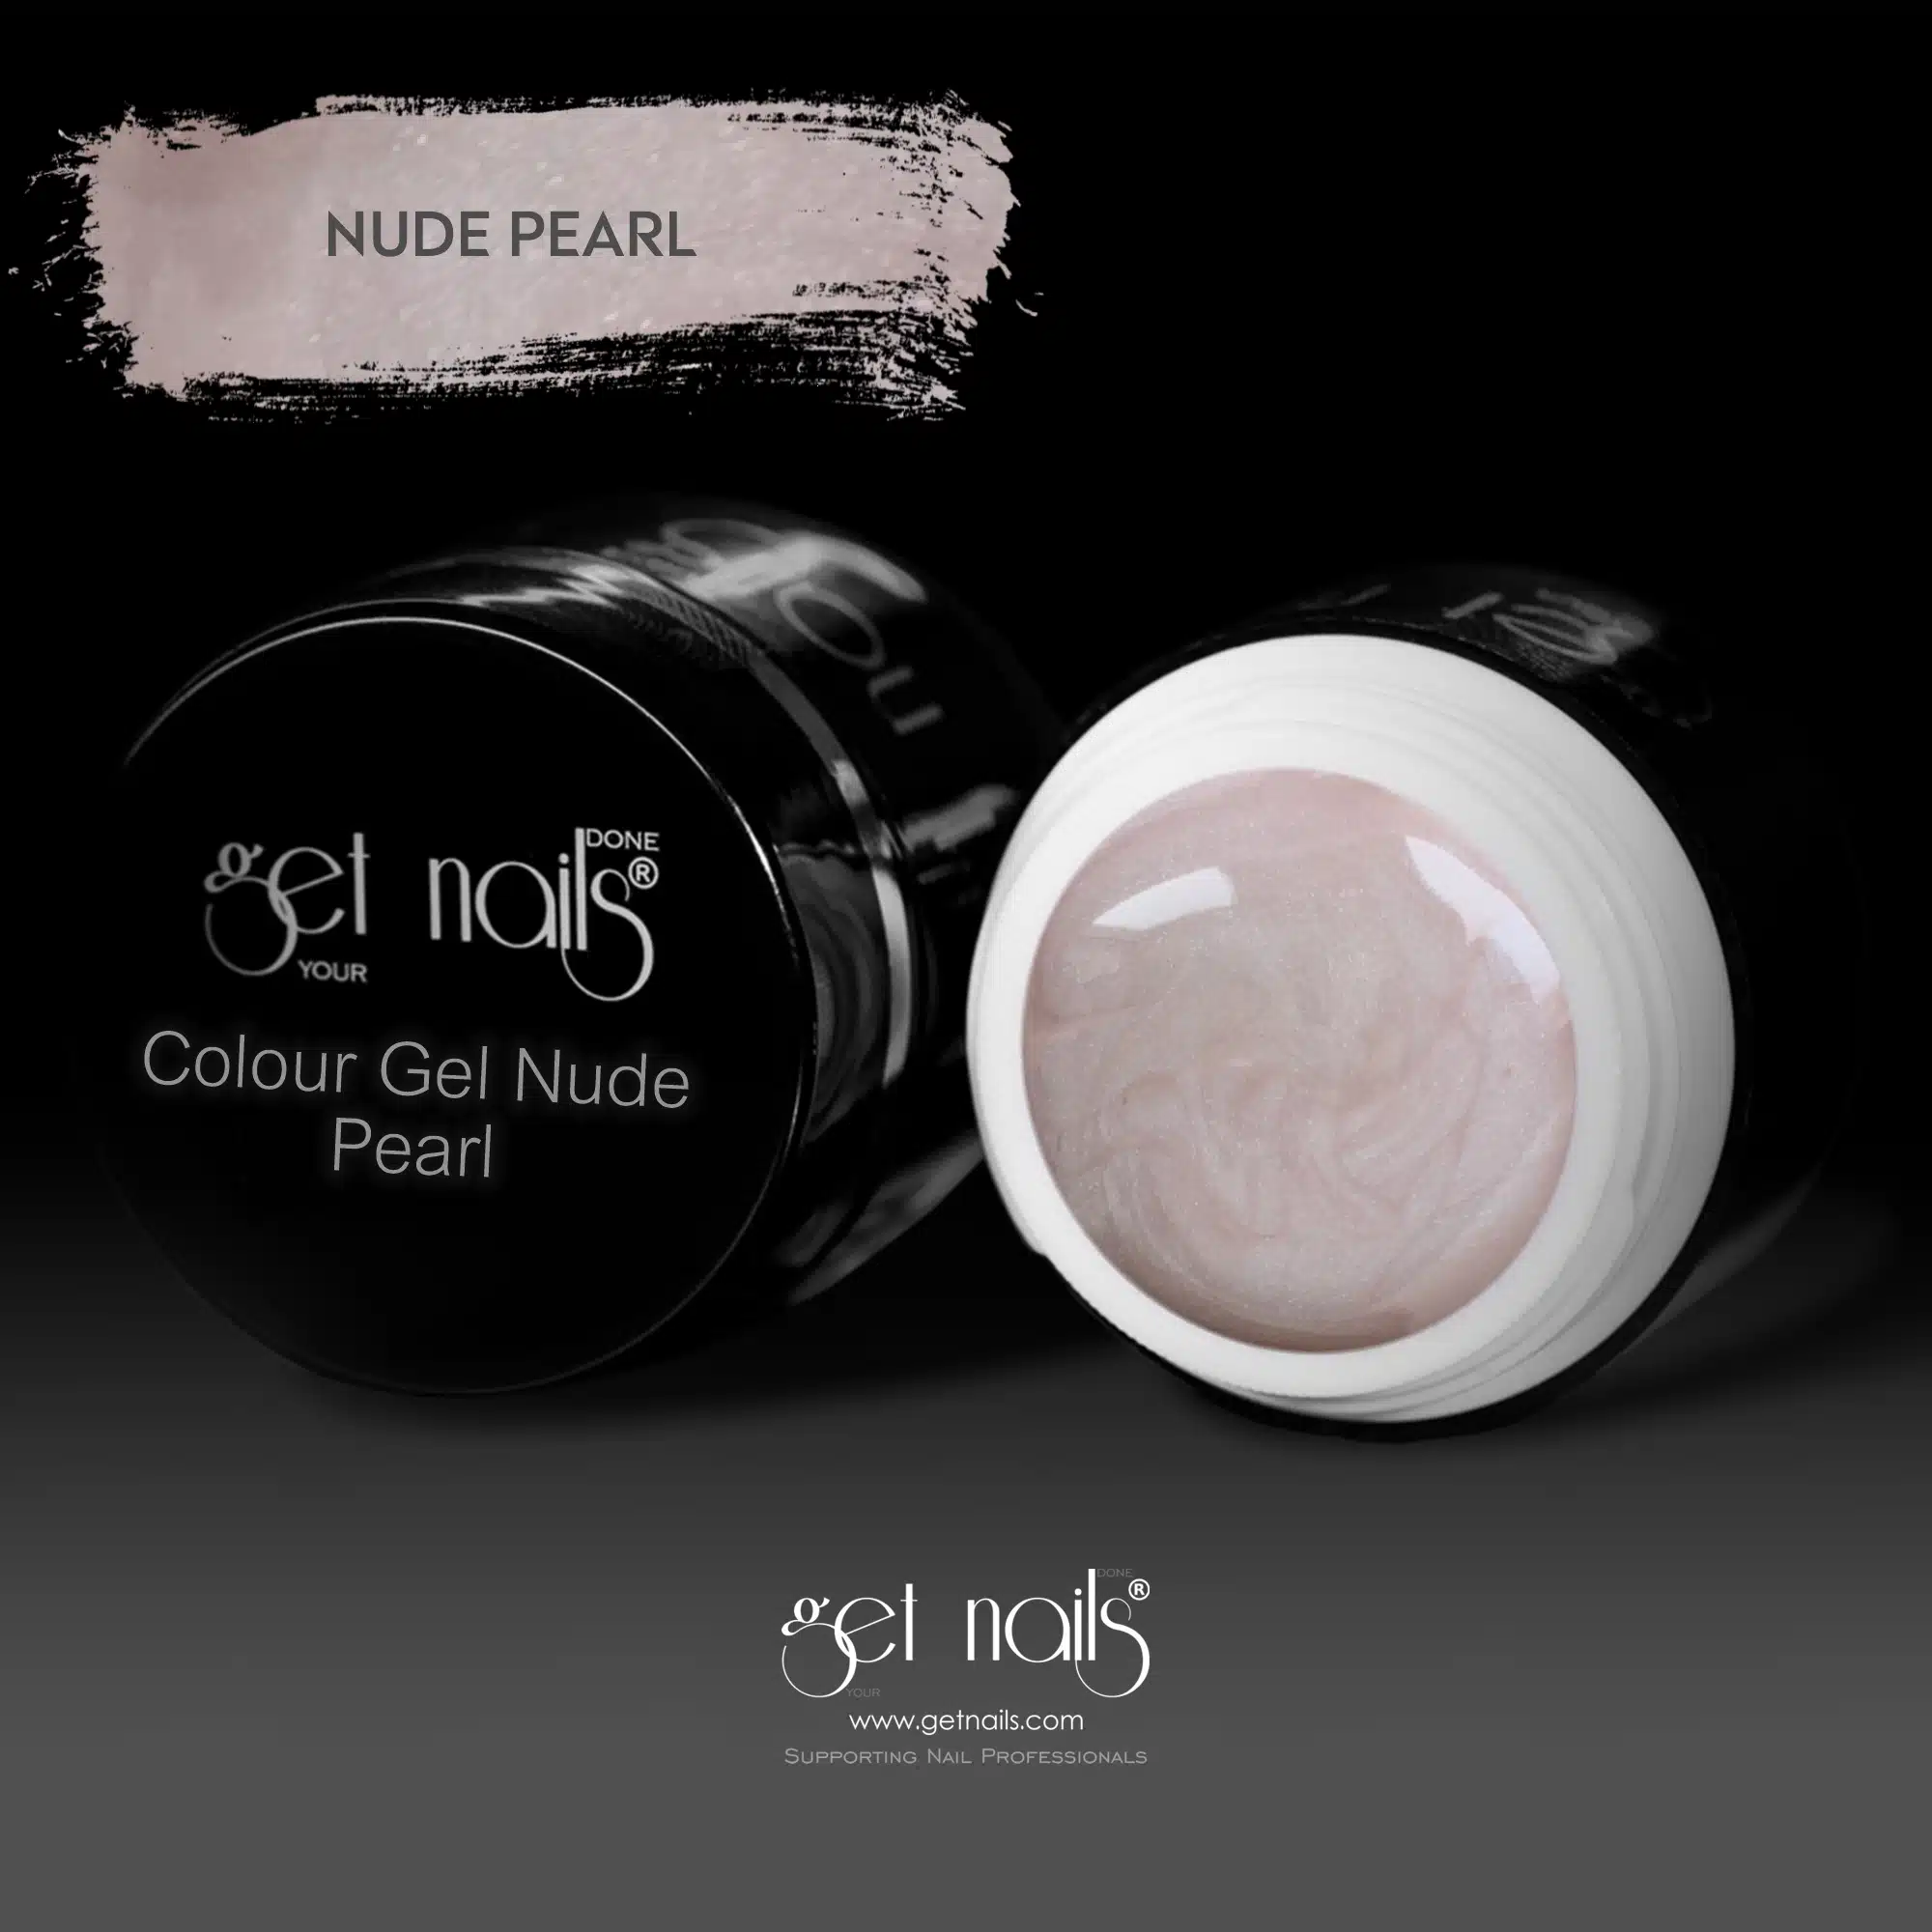 Get Nails Austria - Colour Gel Nude Pearl 5g